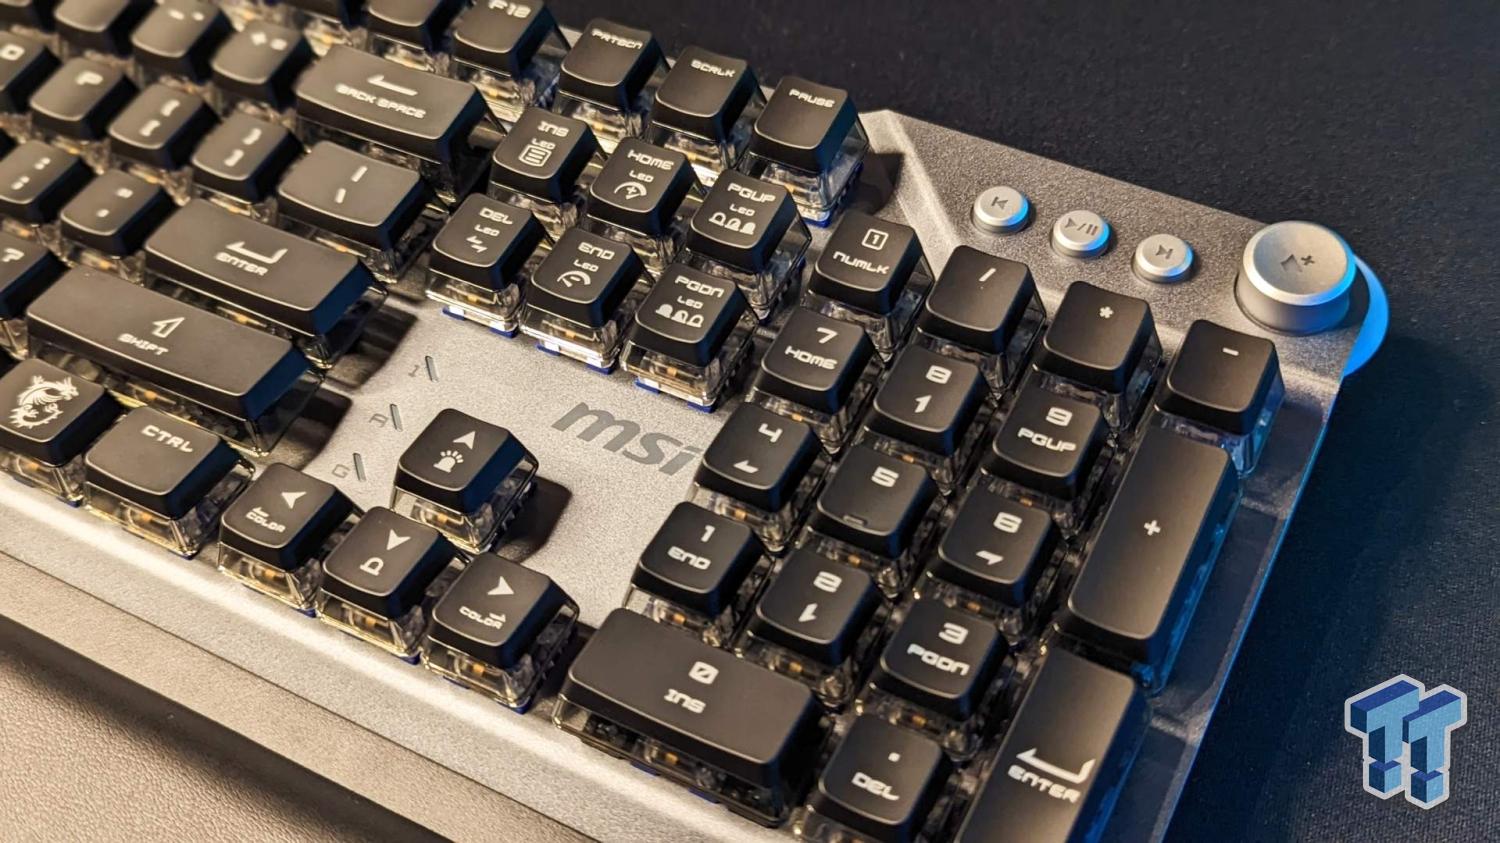 MSI GK71 Sonic Mechanical Keyboard Review